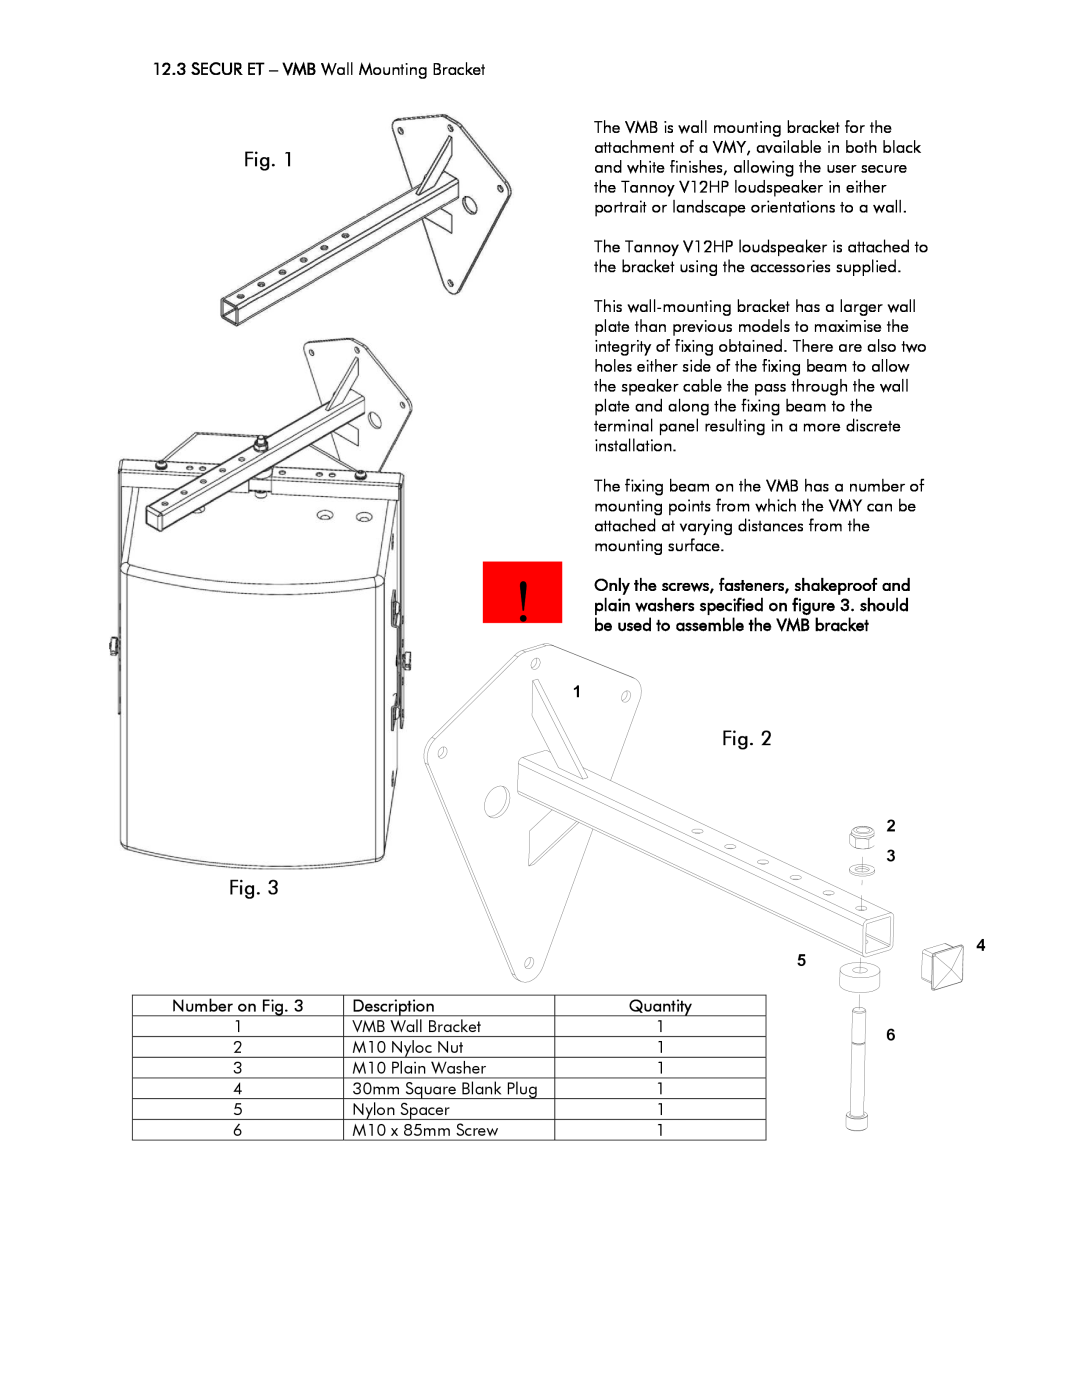 Tannoy V12 HP user manual Description 